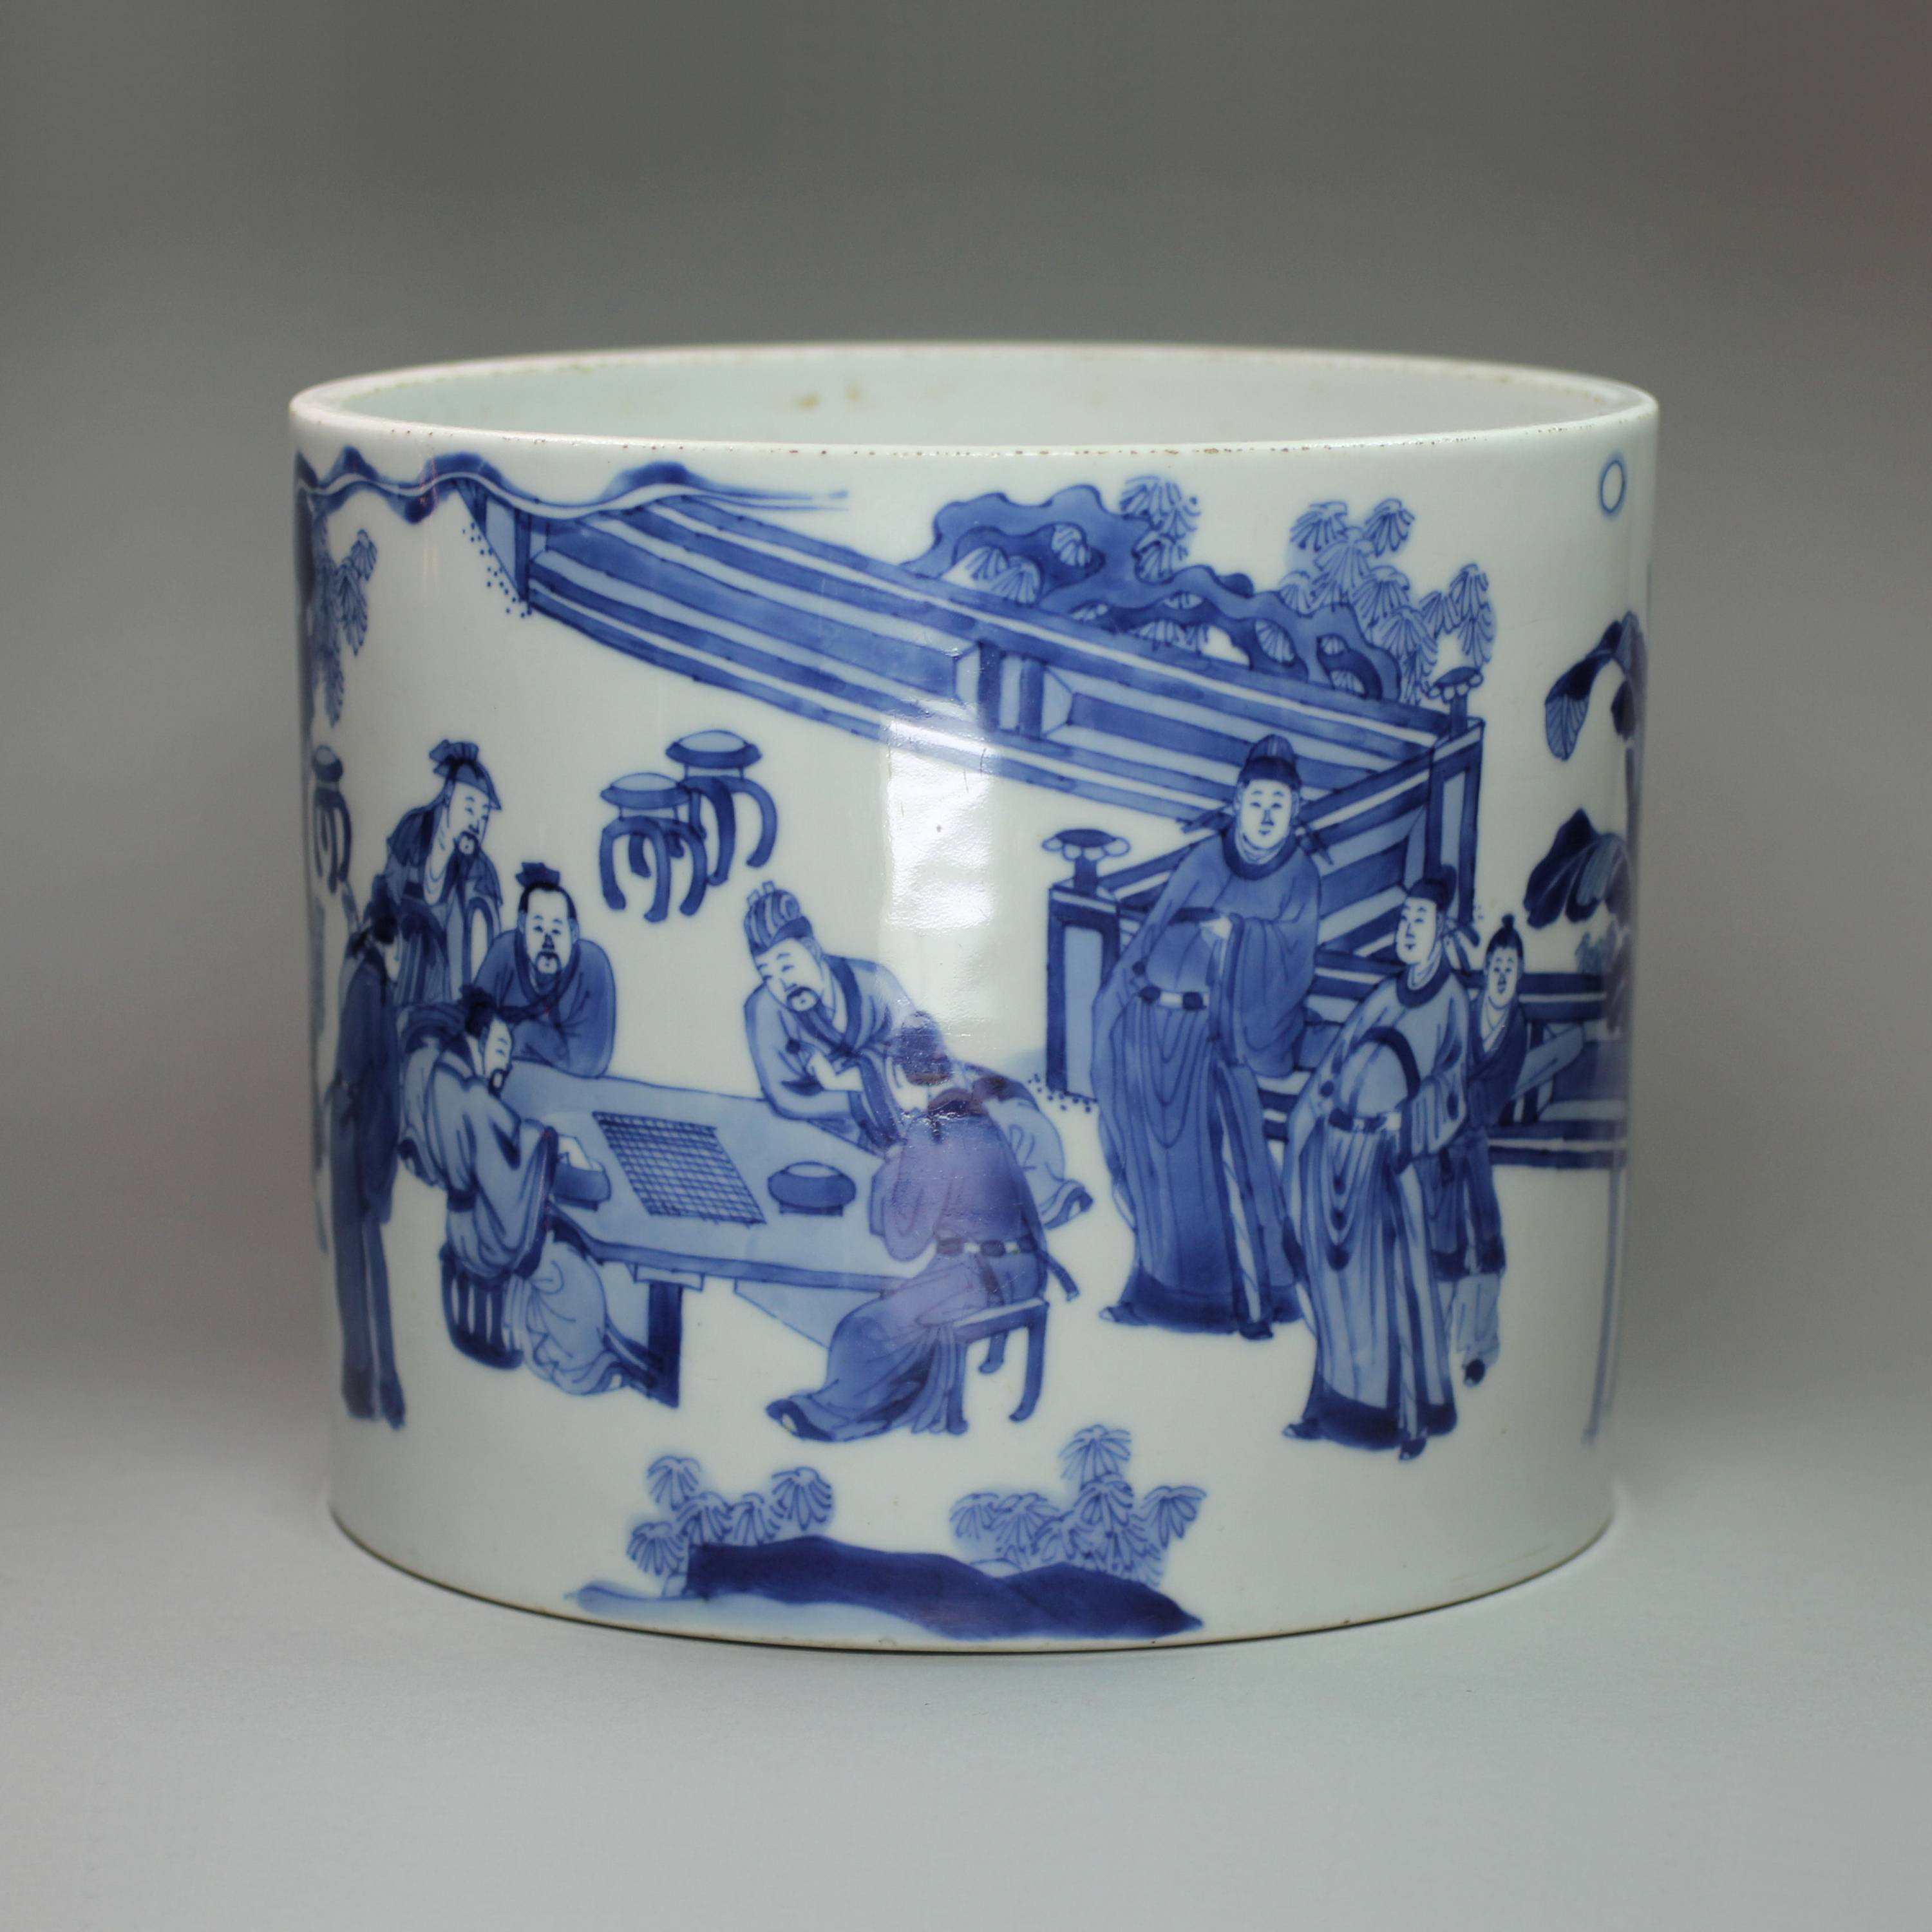 https://www.chinese-porcelain-art.com/media/images/Y801.original.jpg